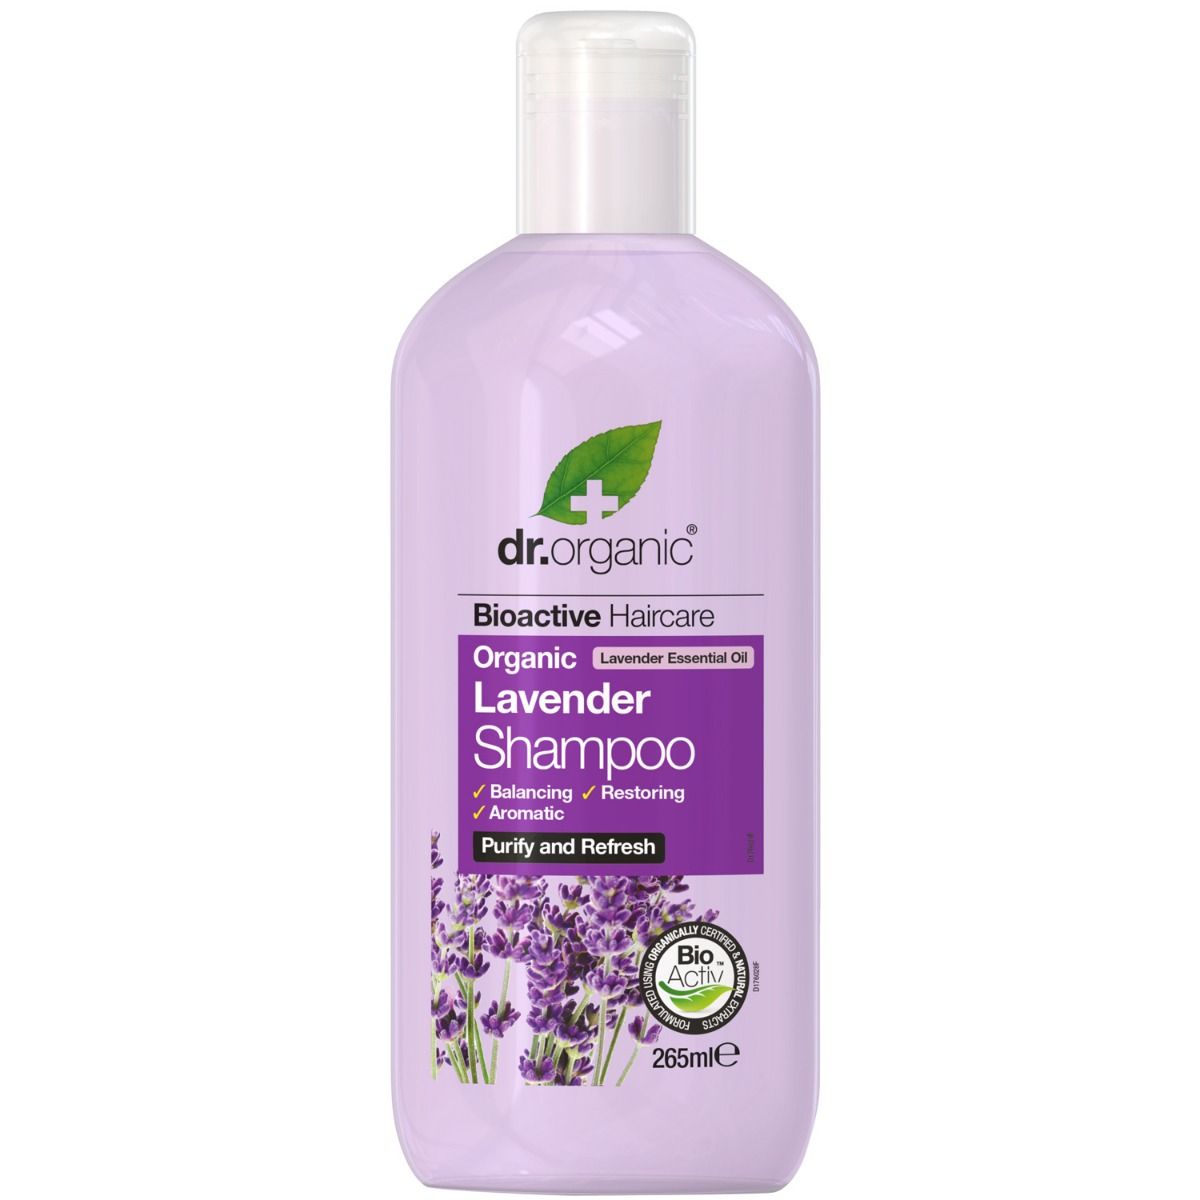 Buy dr.organic Lavender Shampoo, 265 ml Online